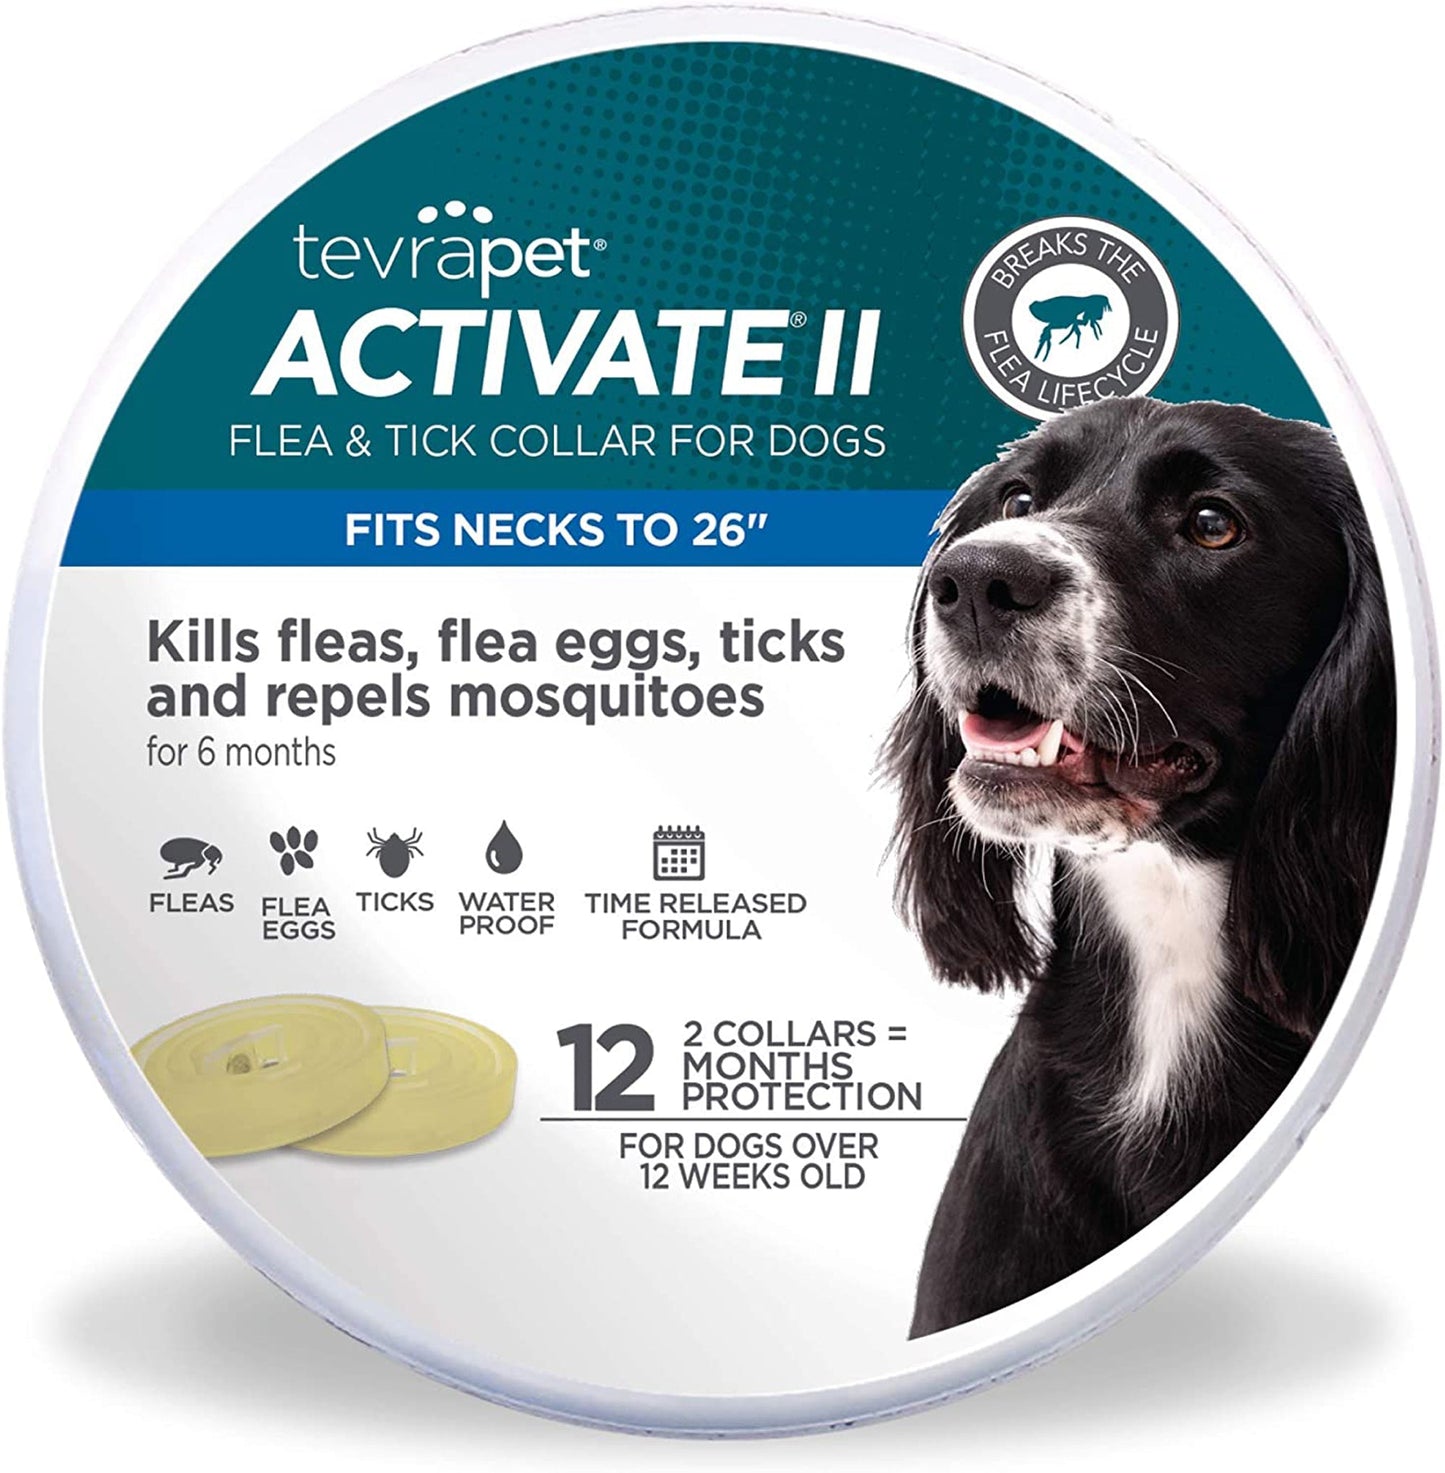 Vetality Protect Flea & Tick Dog Collar 1ea/2 pk